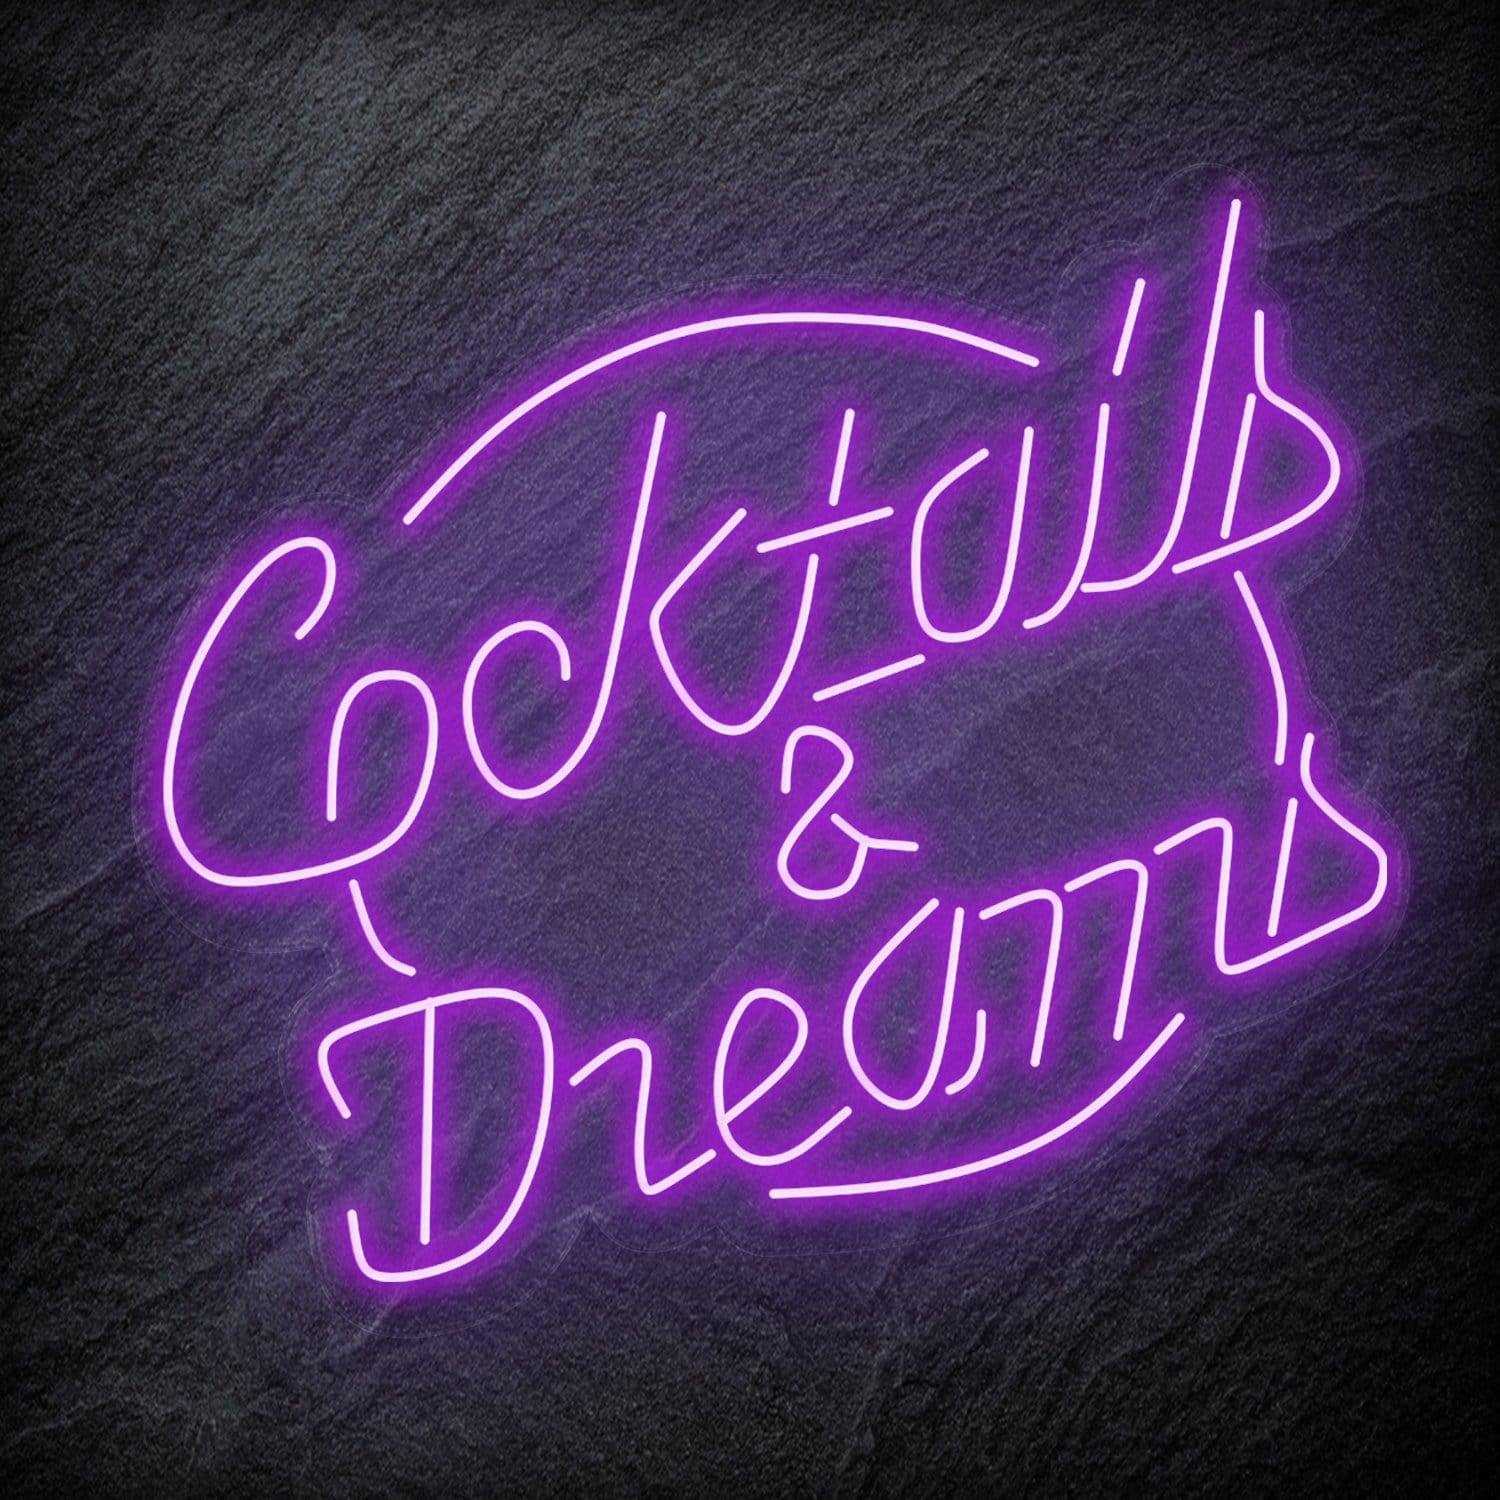 "Cocktails & Dreams" LED Neonschild Schriftzug Sign - NEONEVERGLOW